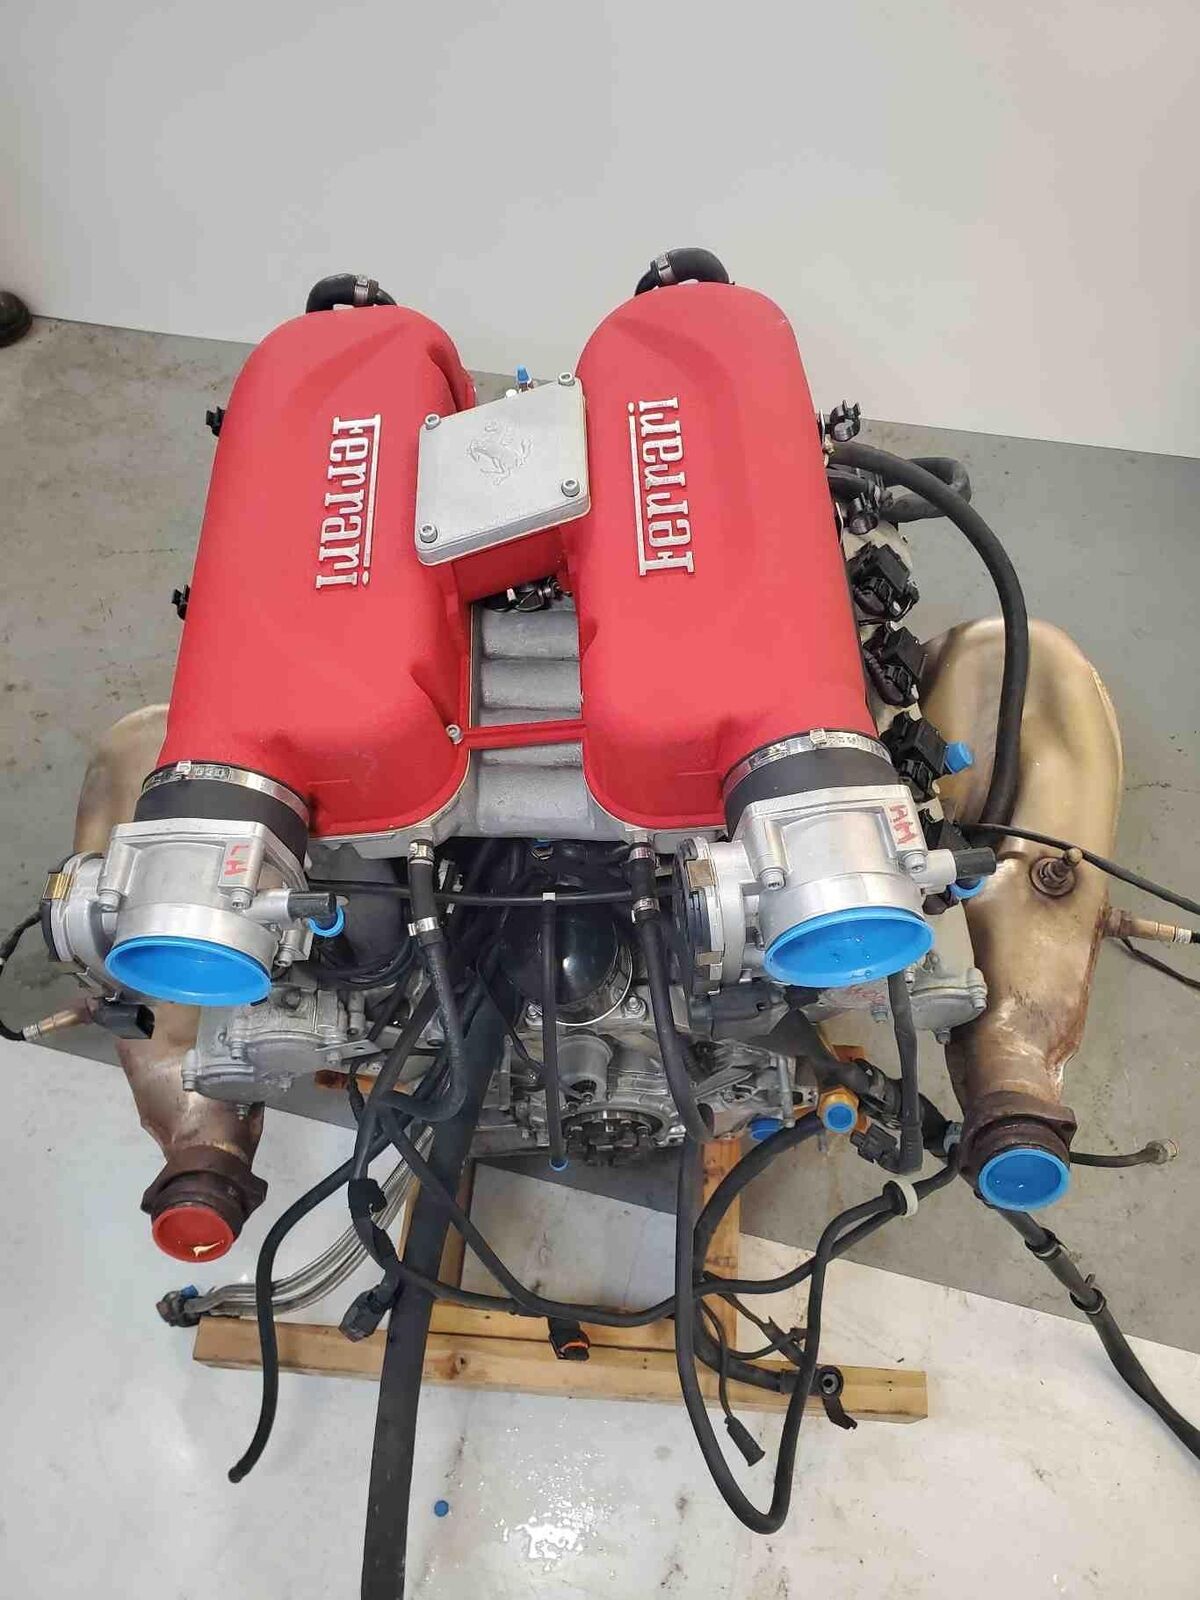 2000 FERRARI 360 Modena Engine Assembly 31K Miles 3.6L